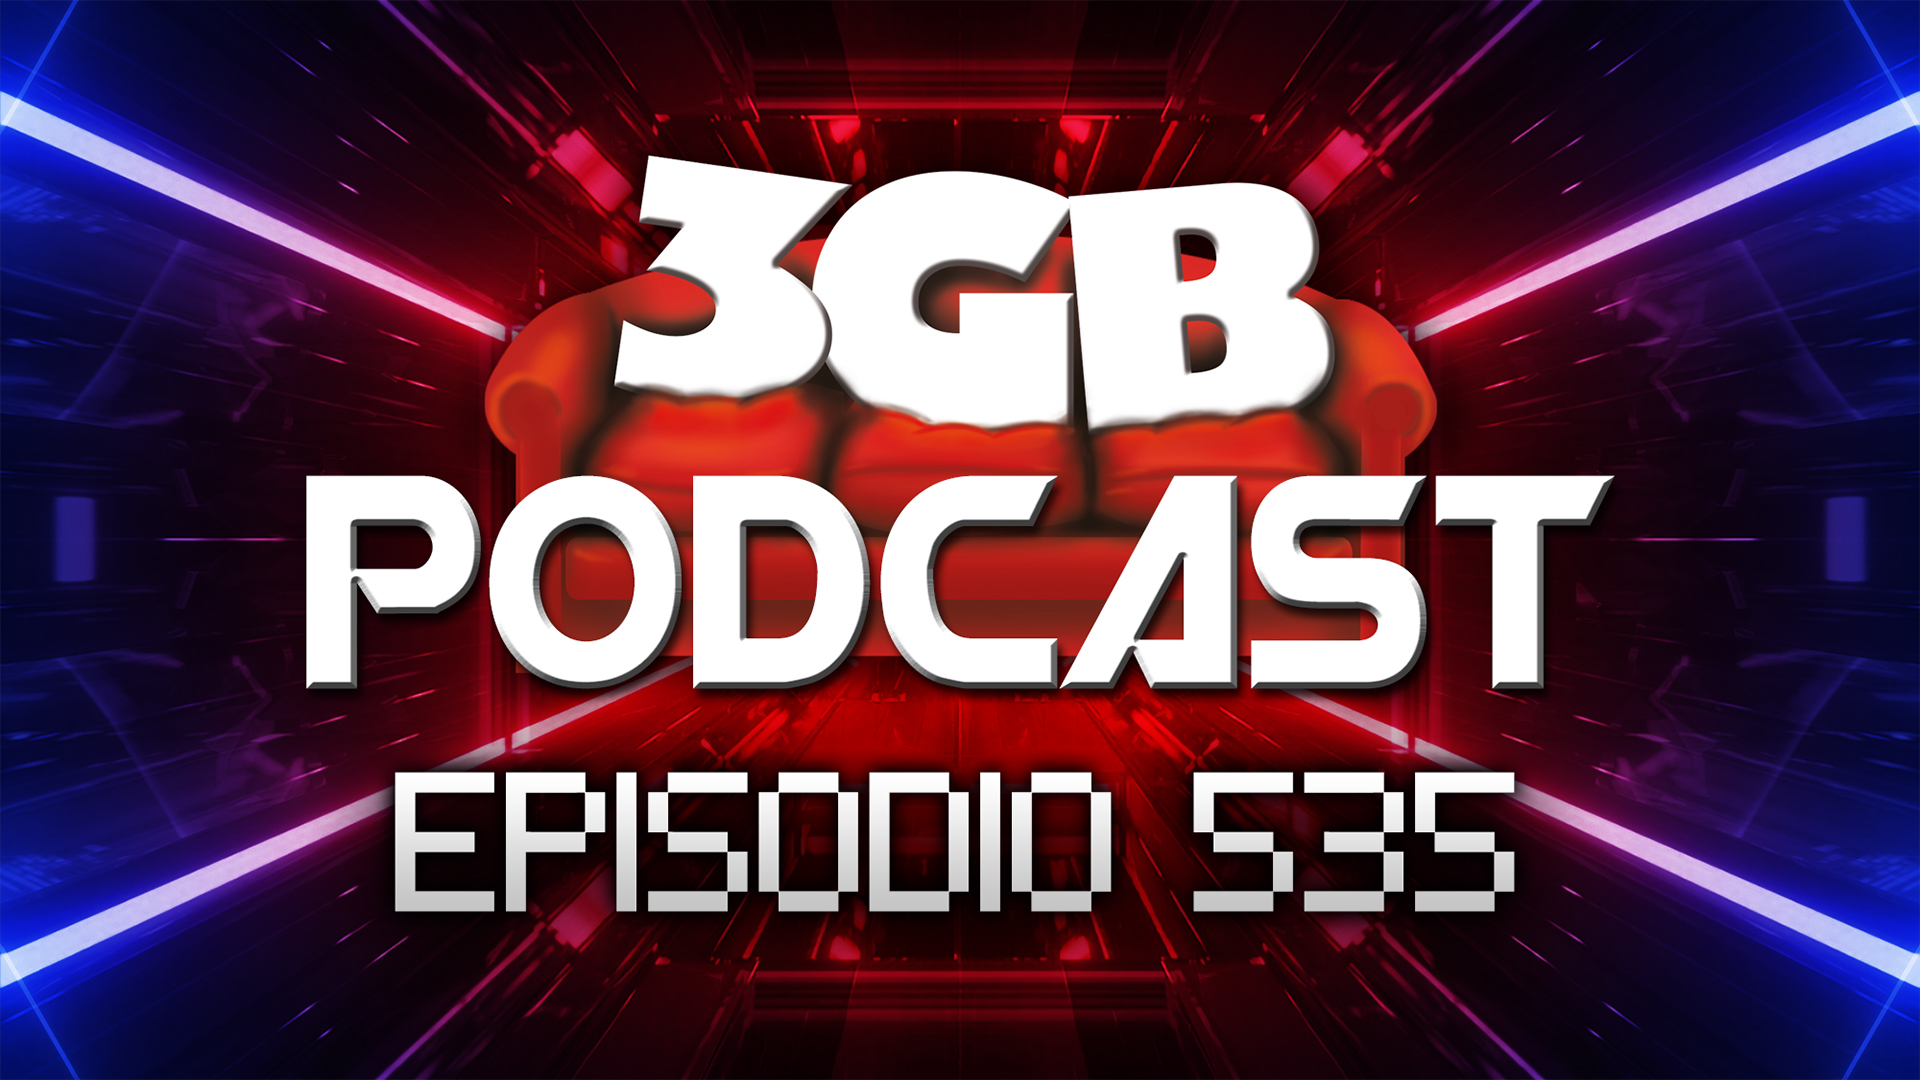 Podcast: Episodio 535, ¿Eres fan de una franquicia o un género?